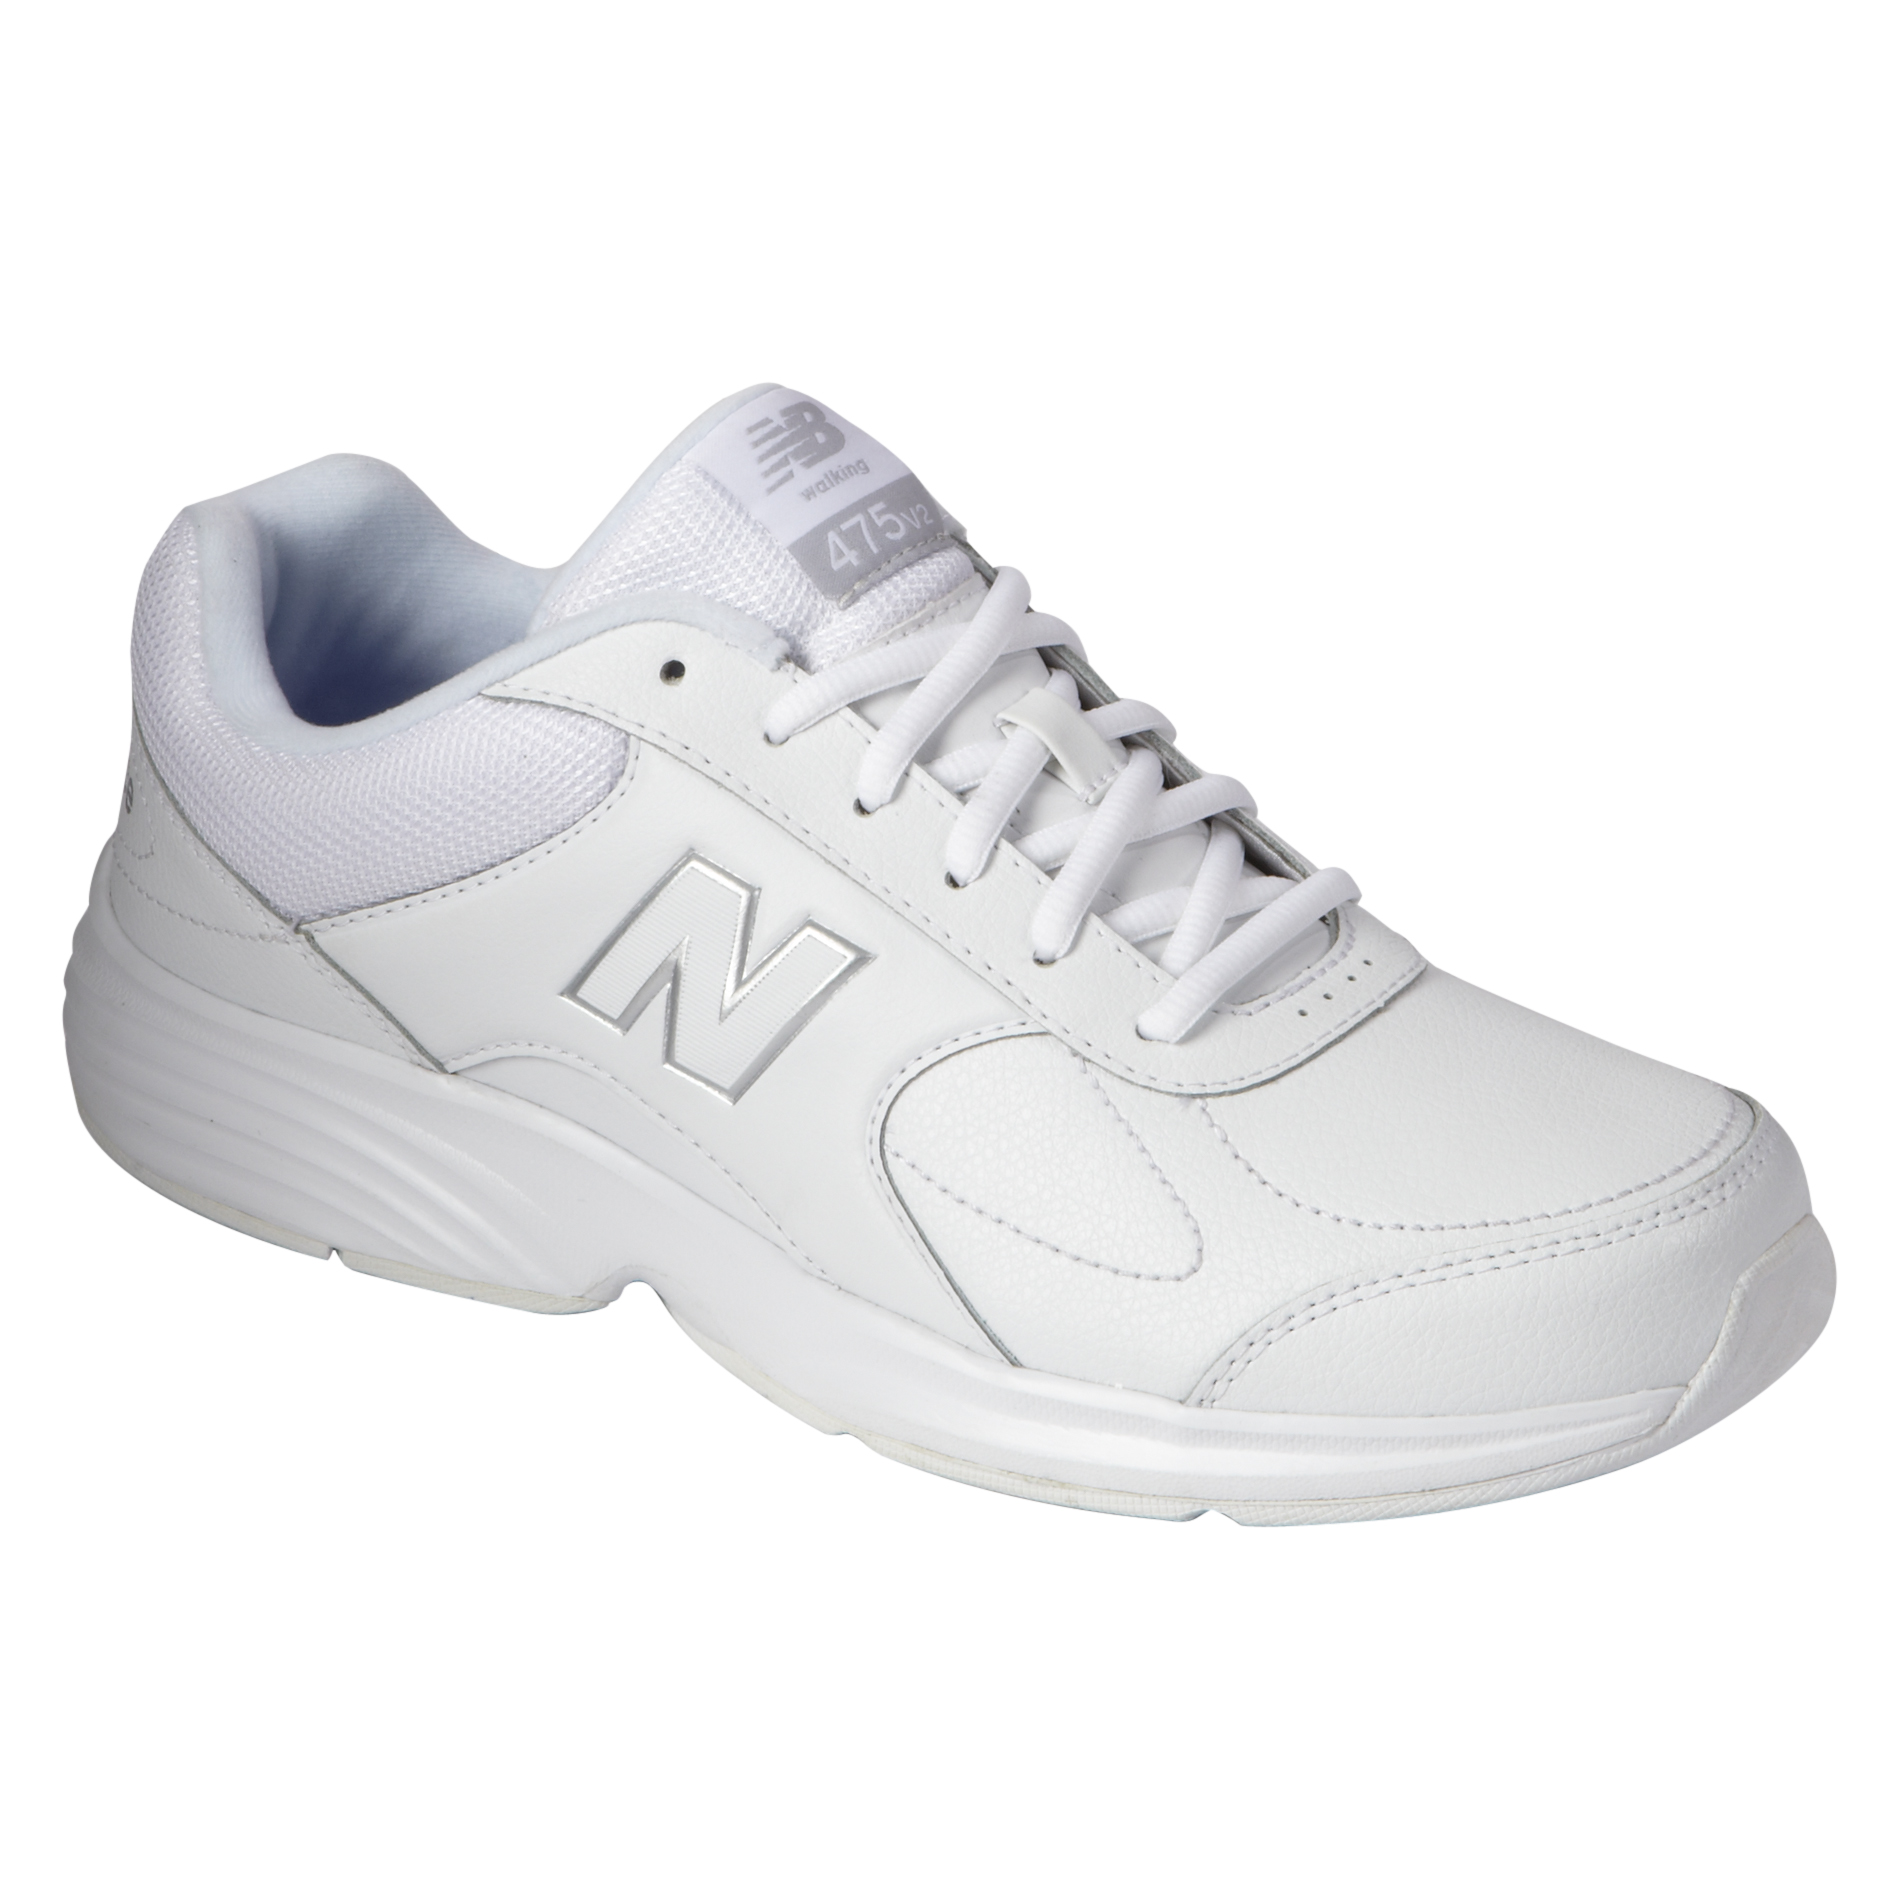 New Balance Men's 475v2 White Wide Width Walking Shoe